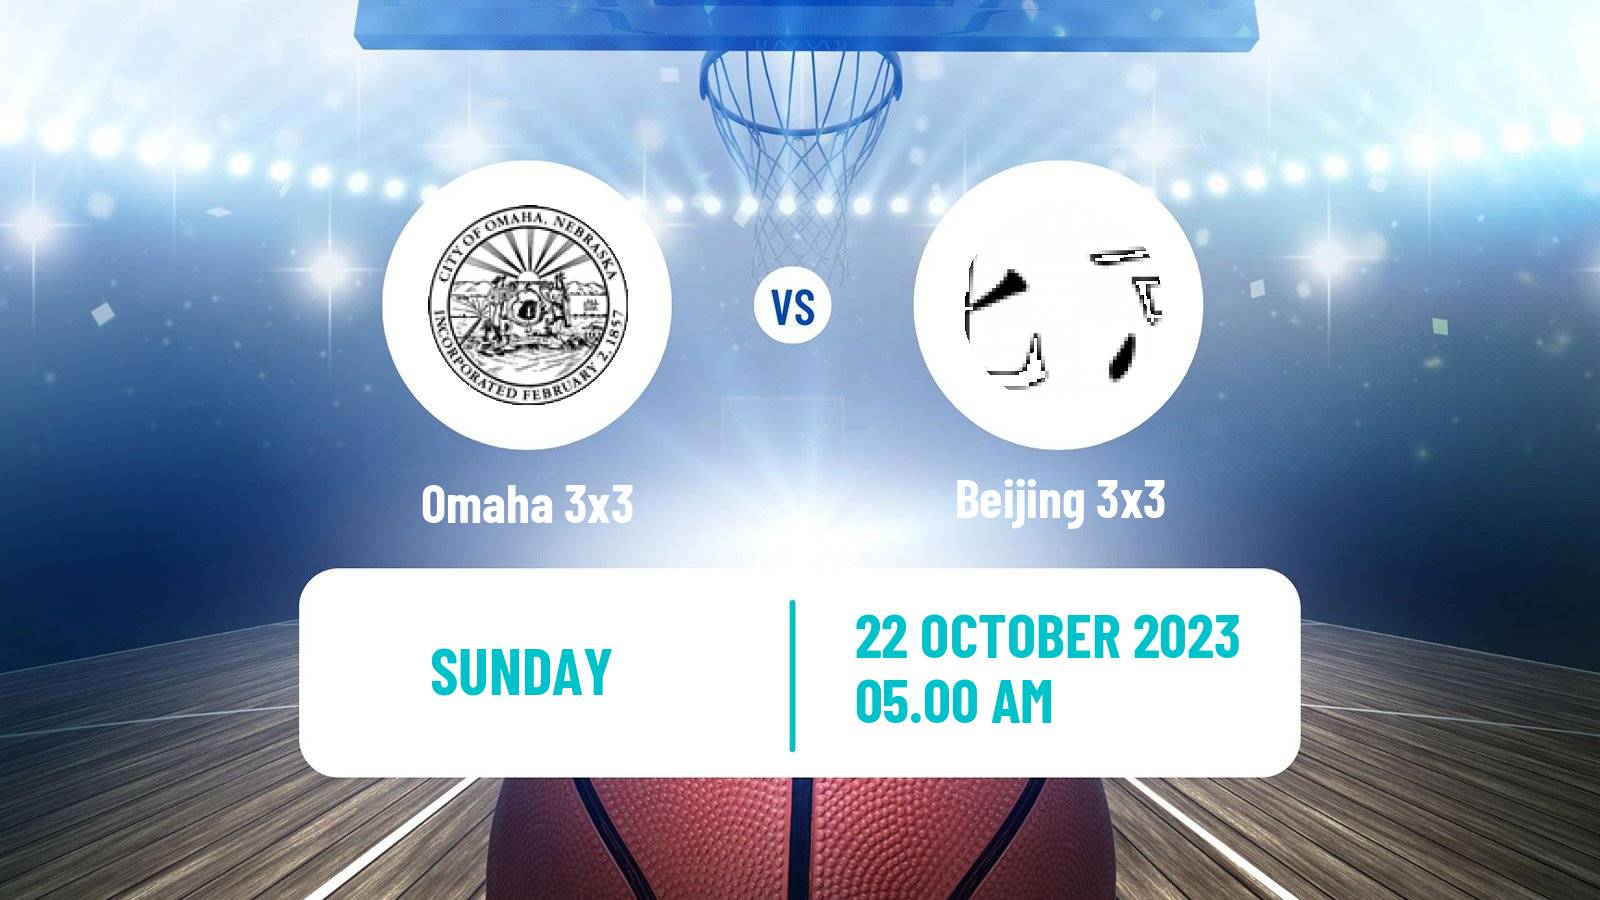 Basketball World Tour Chengdu 3x3 Omaha 3x3 - Beijing 3x3